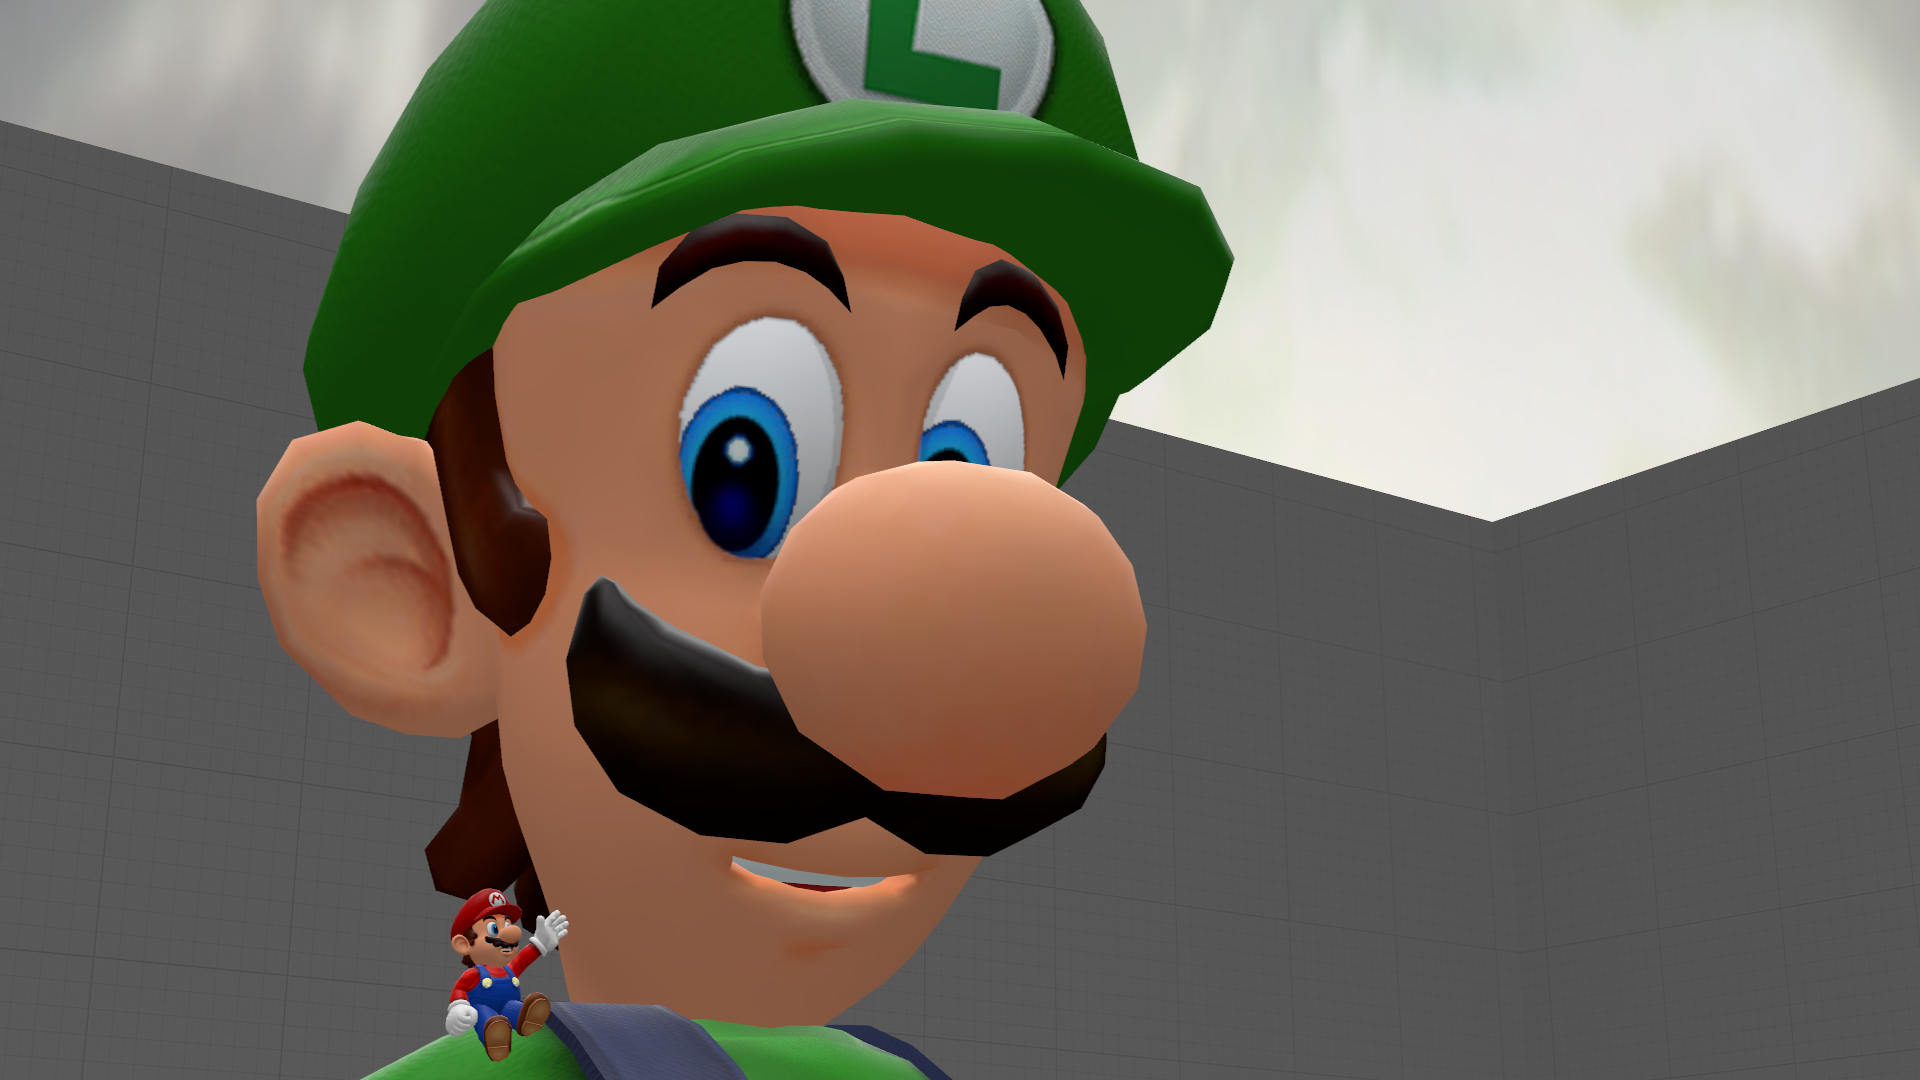 Mario and Luigi: Dream Team by SuperMarioSFM on DeviantArt.